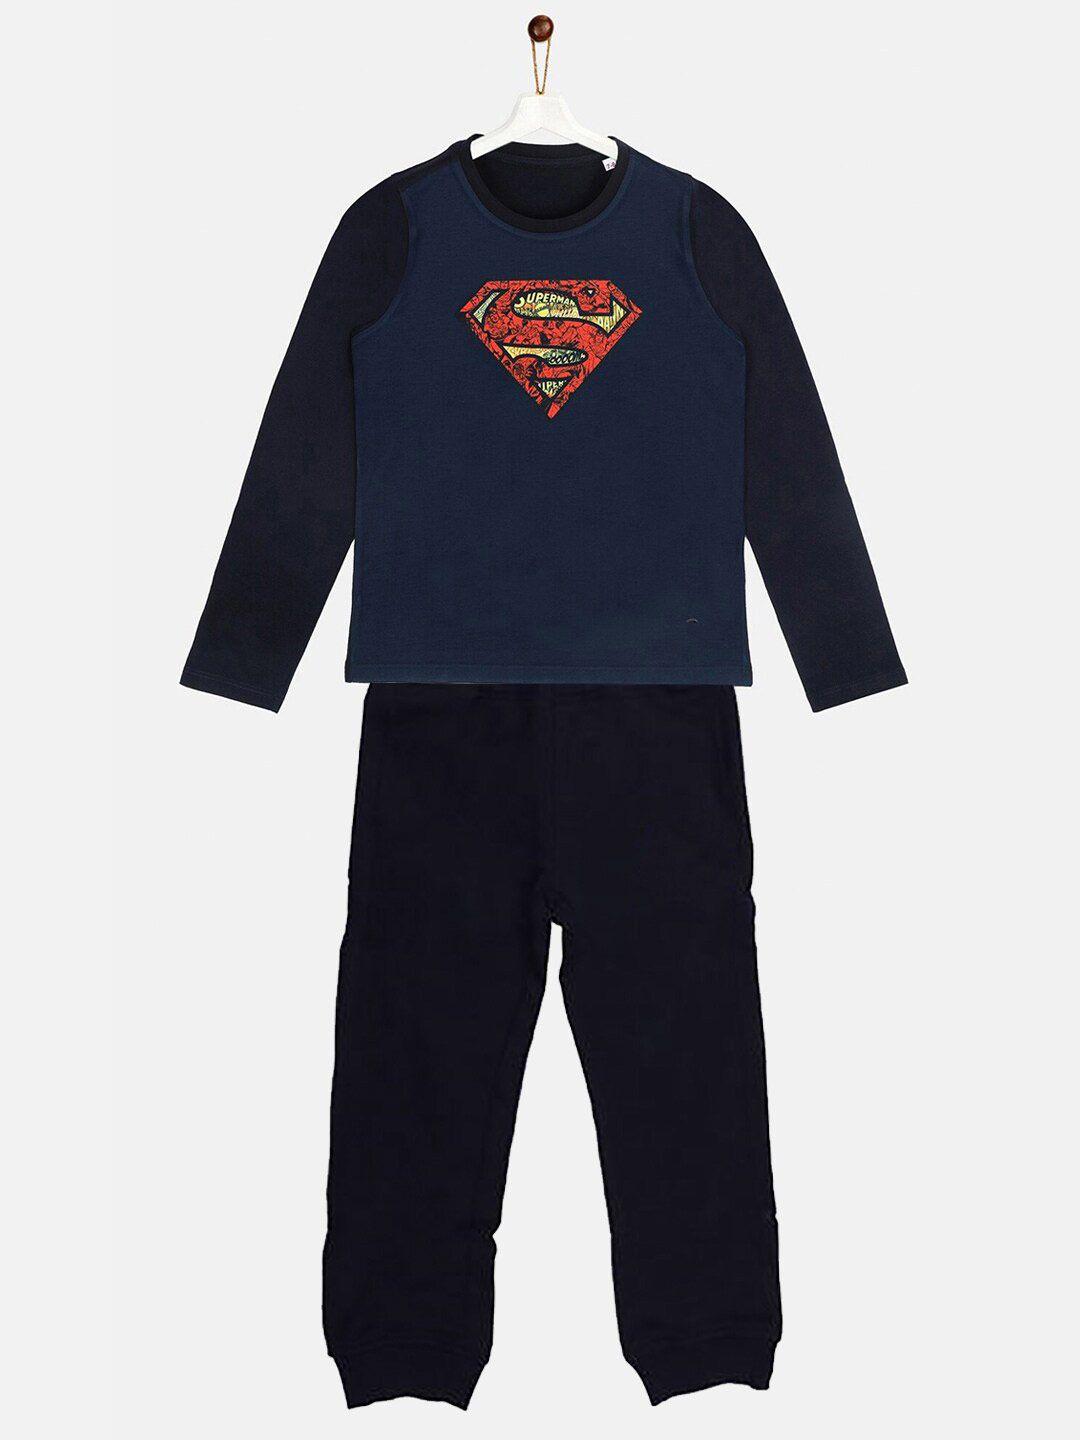 yk justice league boys navy blue superman printed clothing set